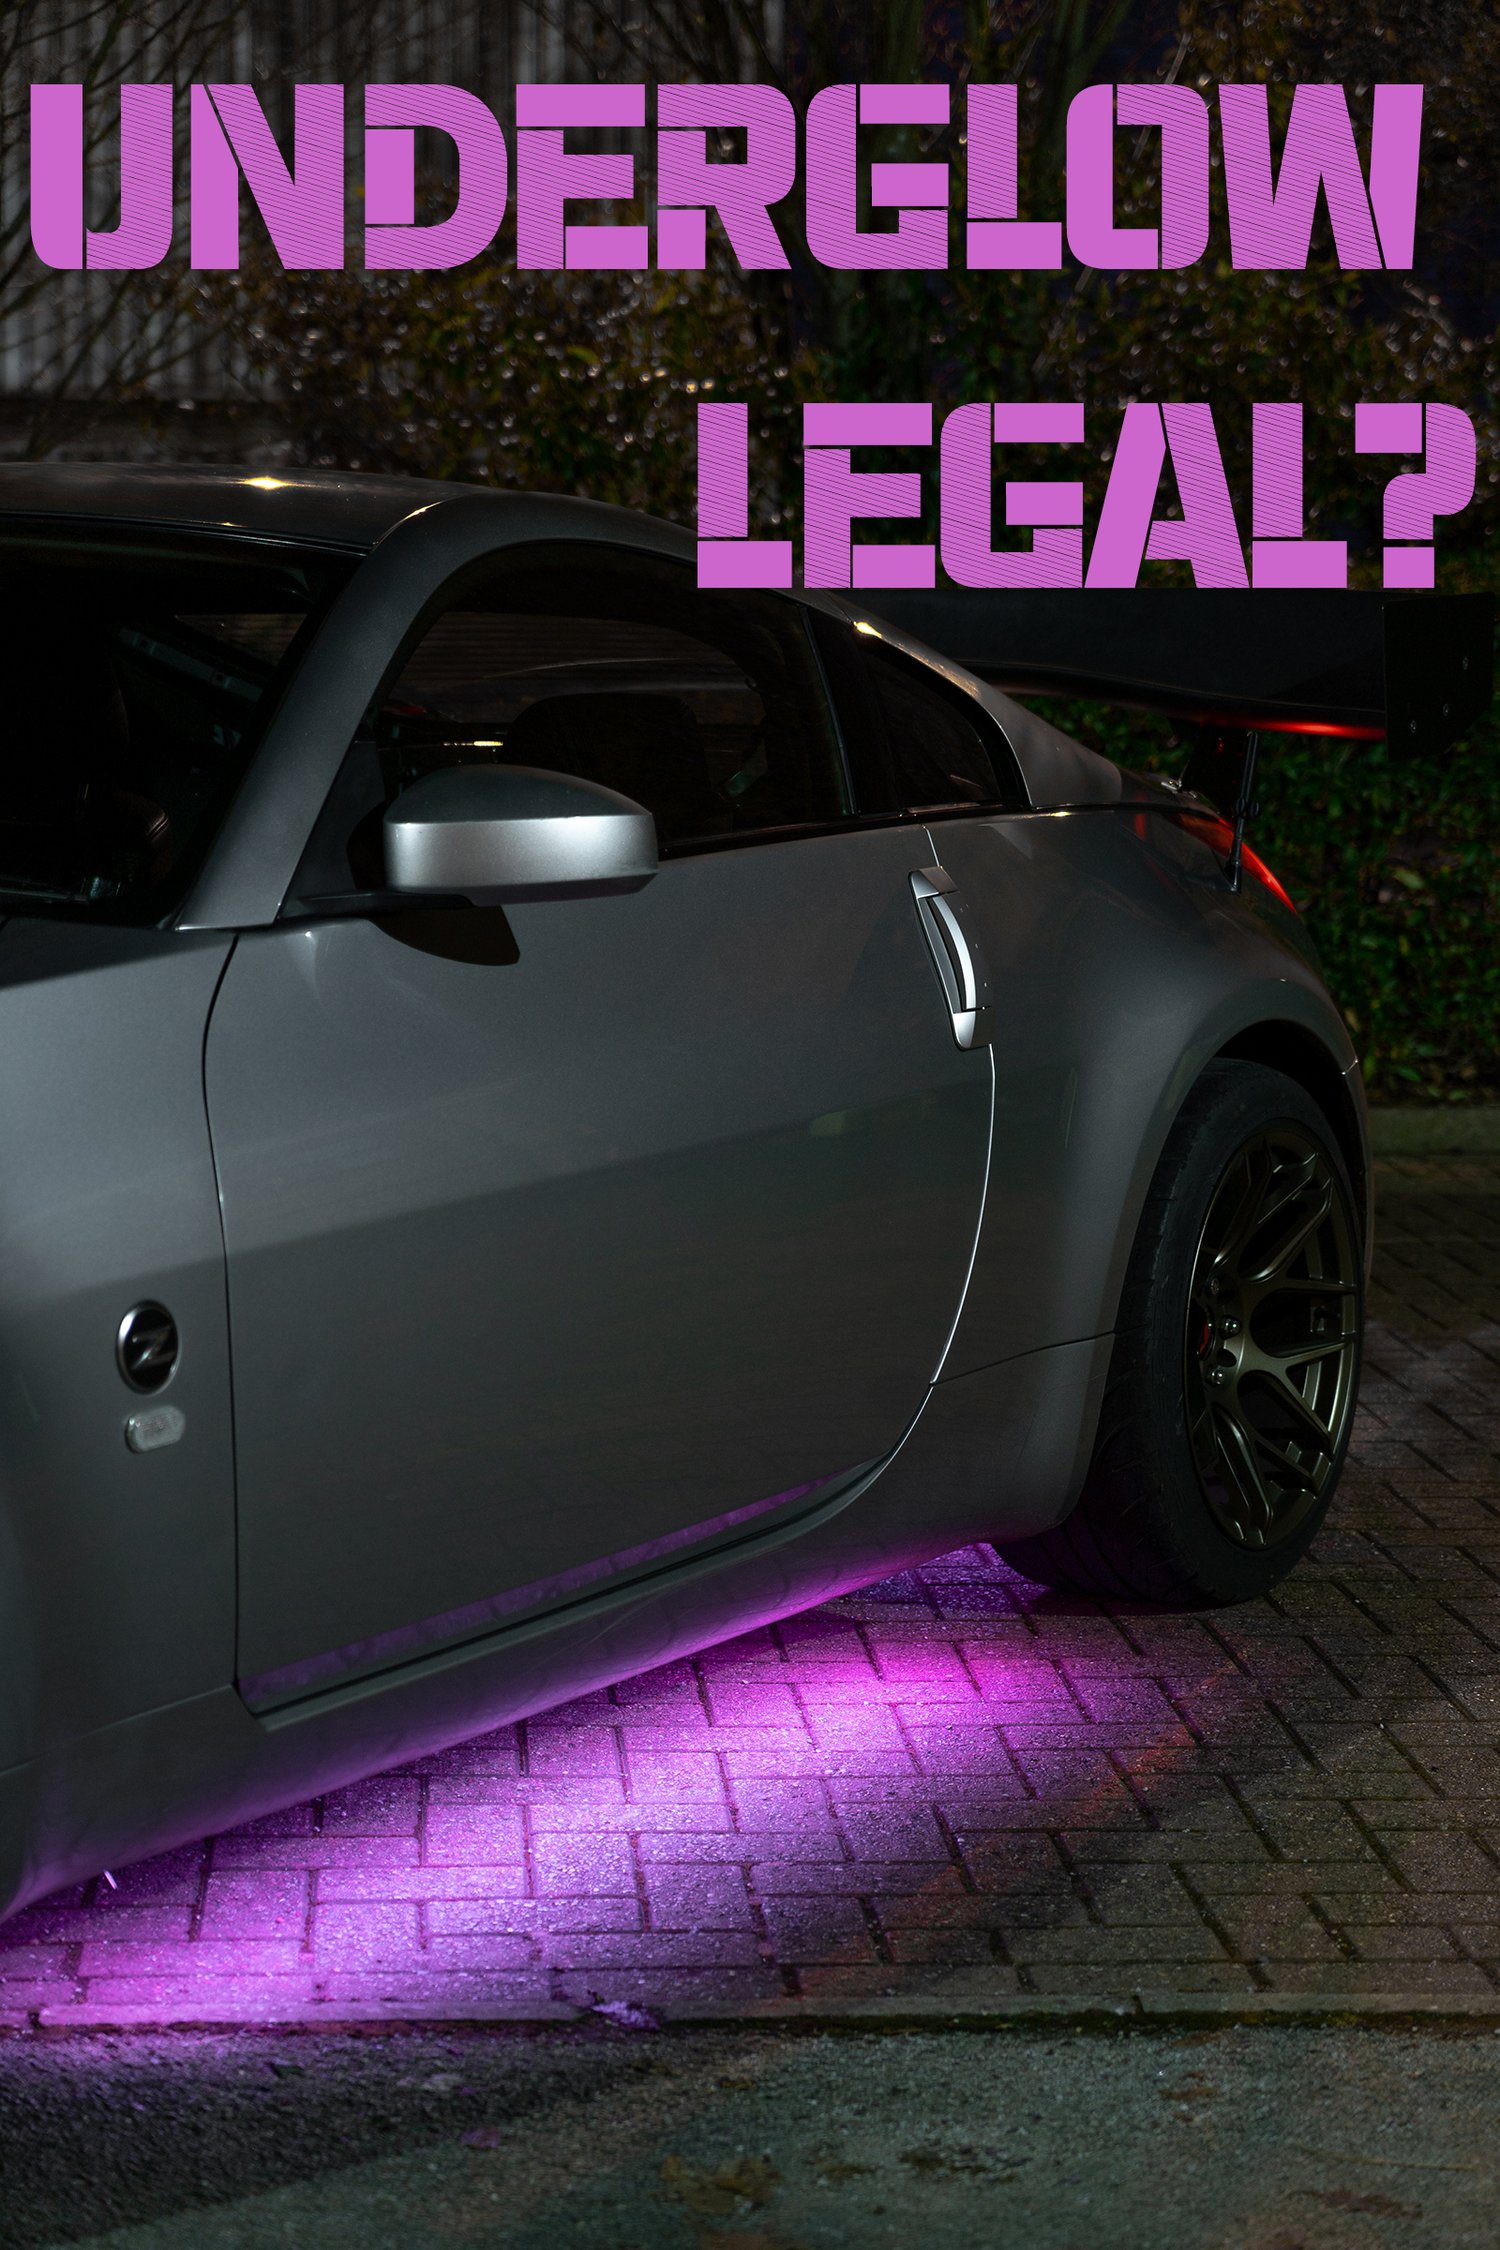 Is Underglow Legal in UK? — Luminescence, Car Underglow